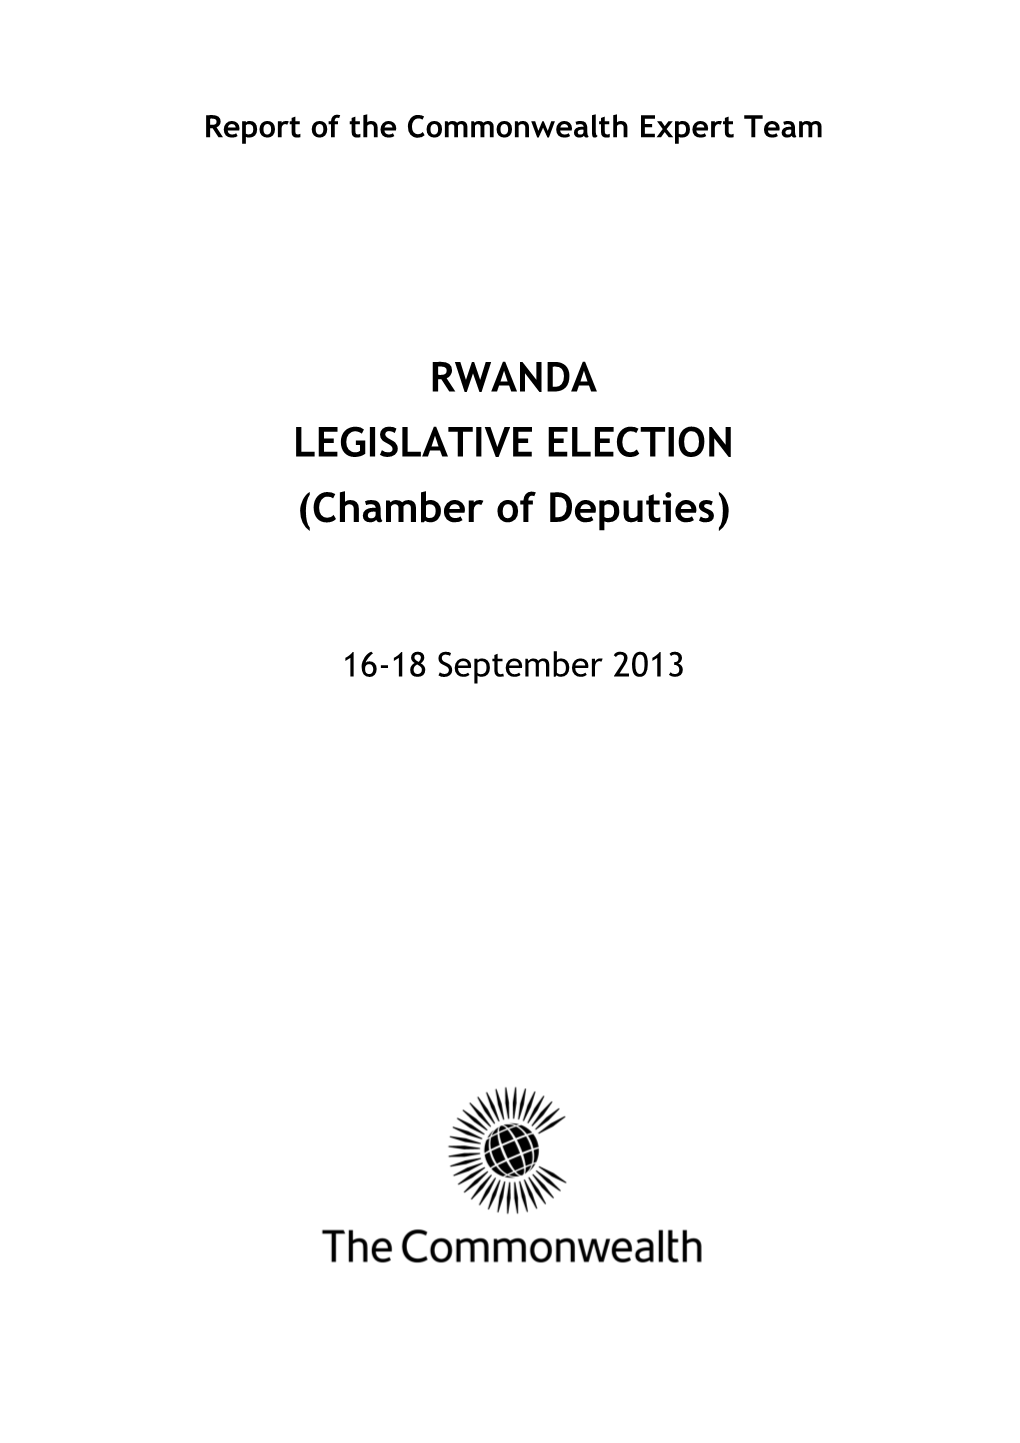 RWANDA LEGISLATIVE ELECTION (Chamber of Deputies)